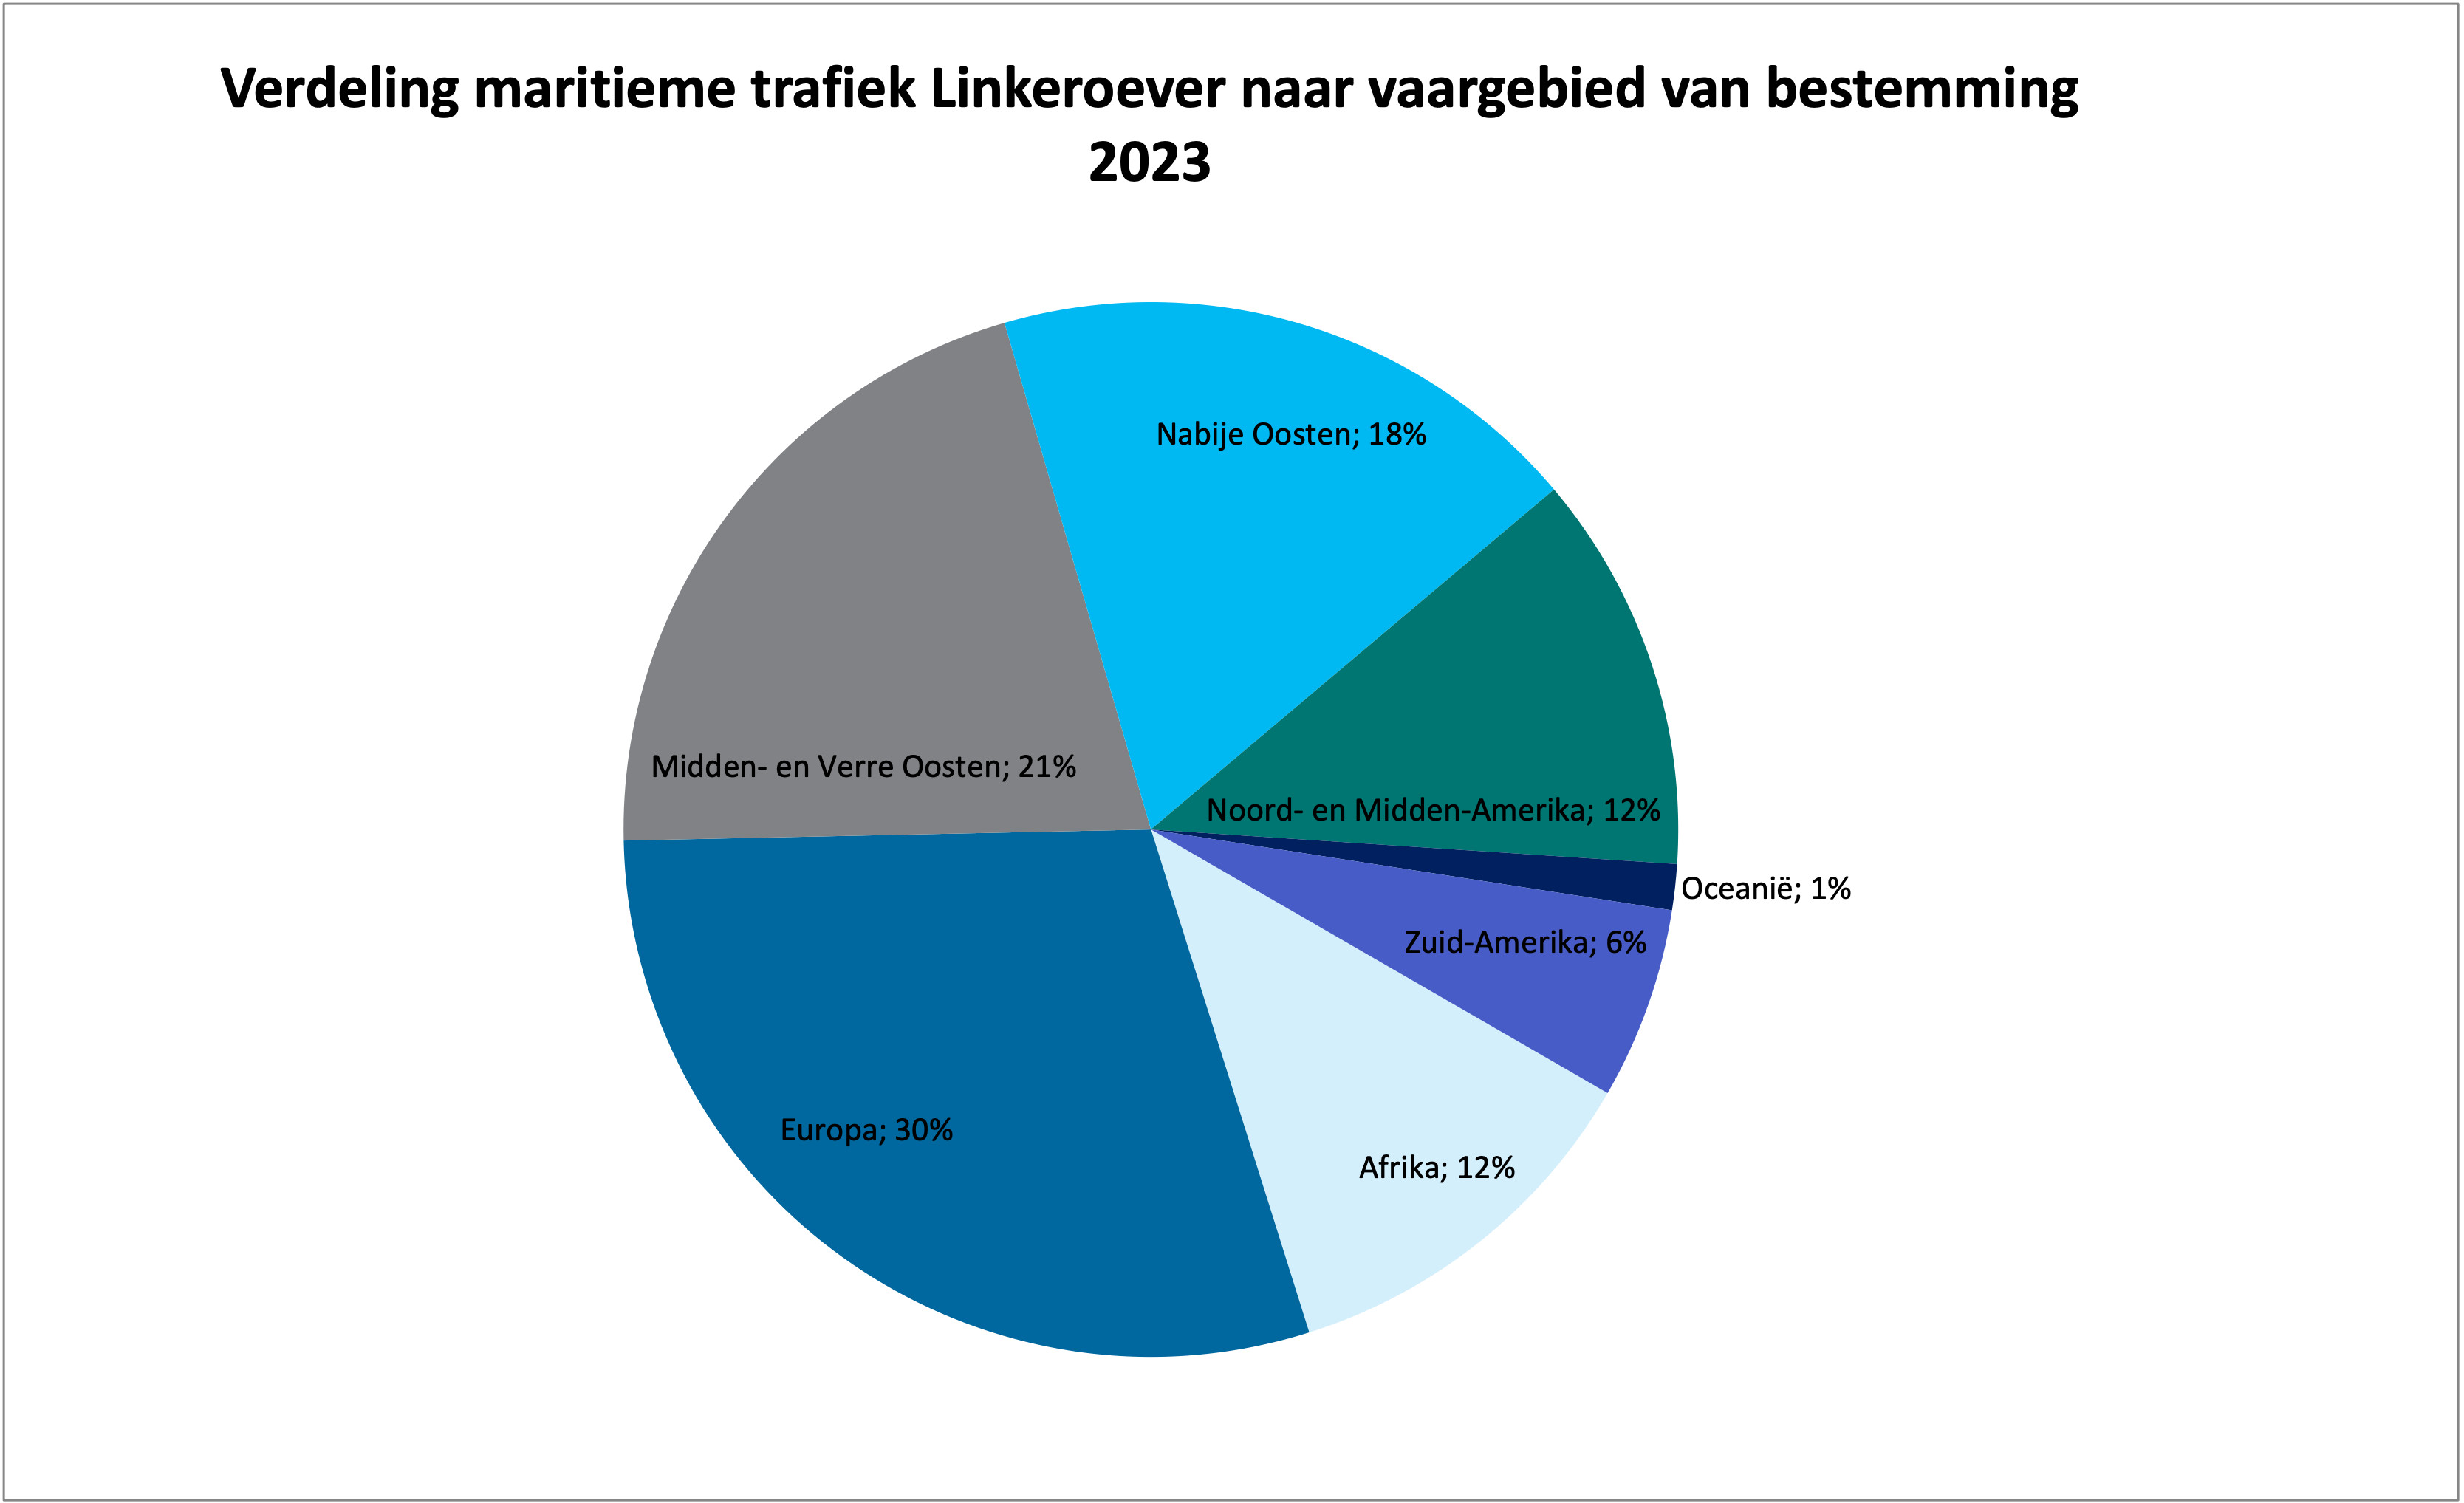 Verdeling maritieme trafiek vaargebied bestemming / Distribution of left bank maritime traffic to shipping area of destination